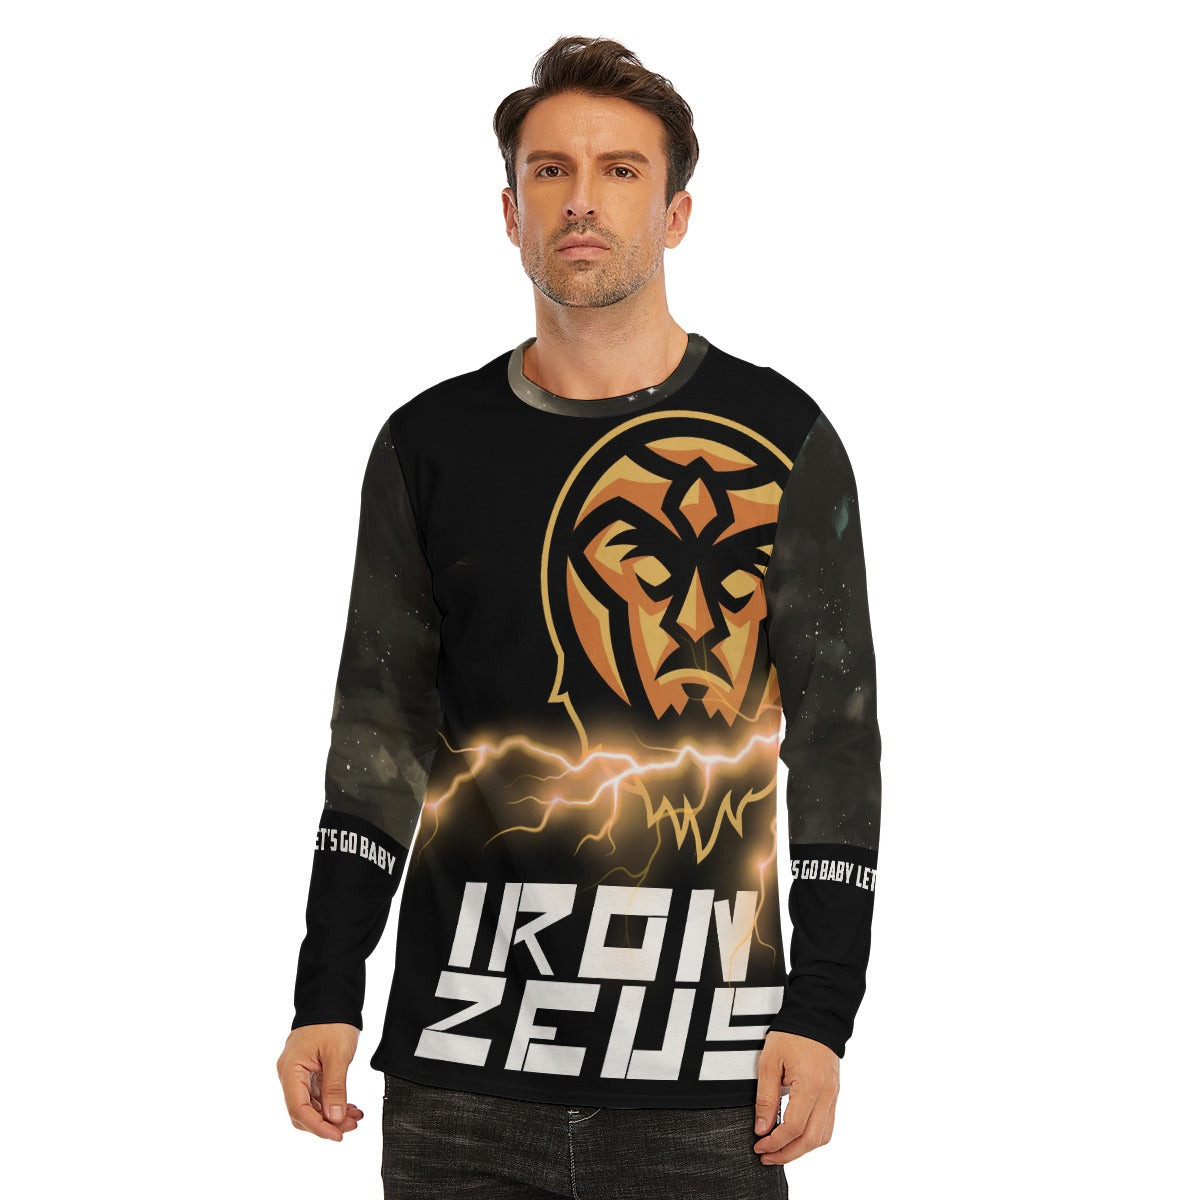 IronZeus All Over Print Long Sleeve T-Shirt